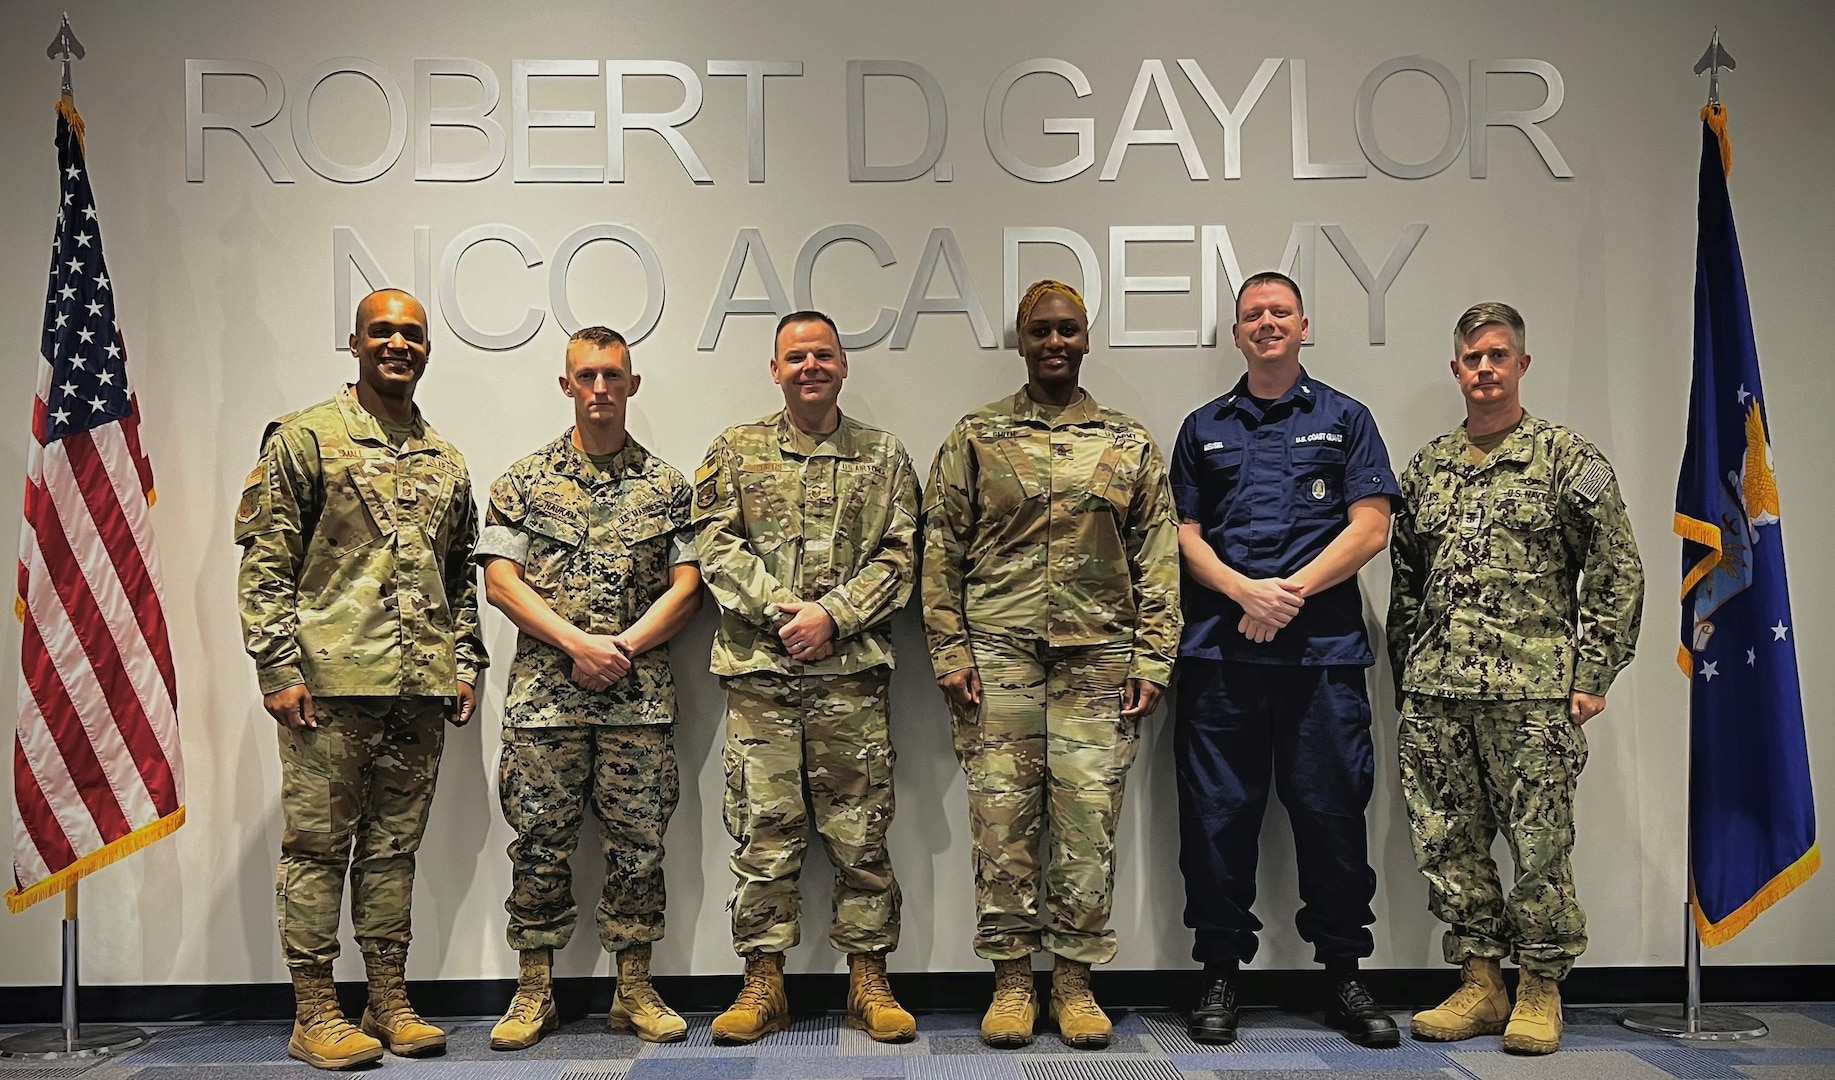 Robert D. Gaylor NCO Academy hosts first senior leader forum